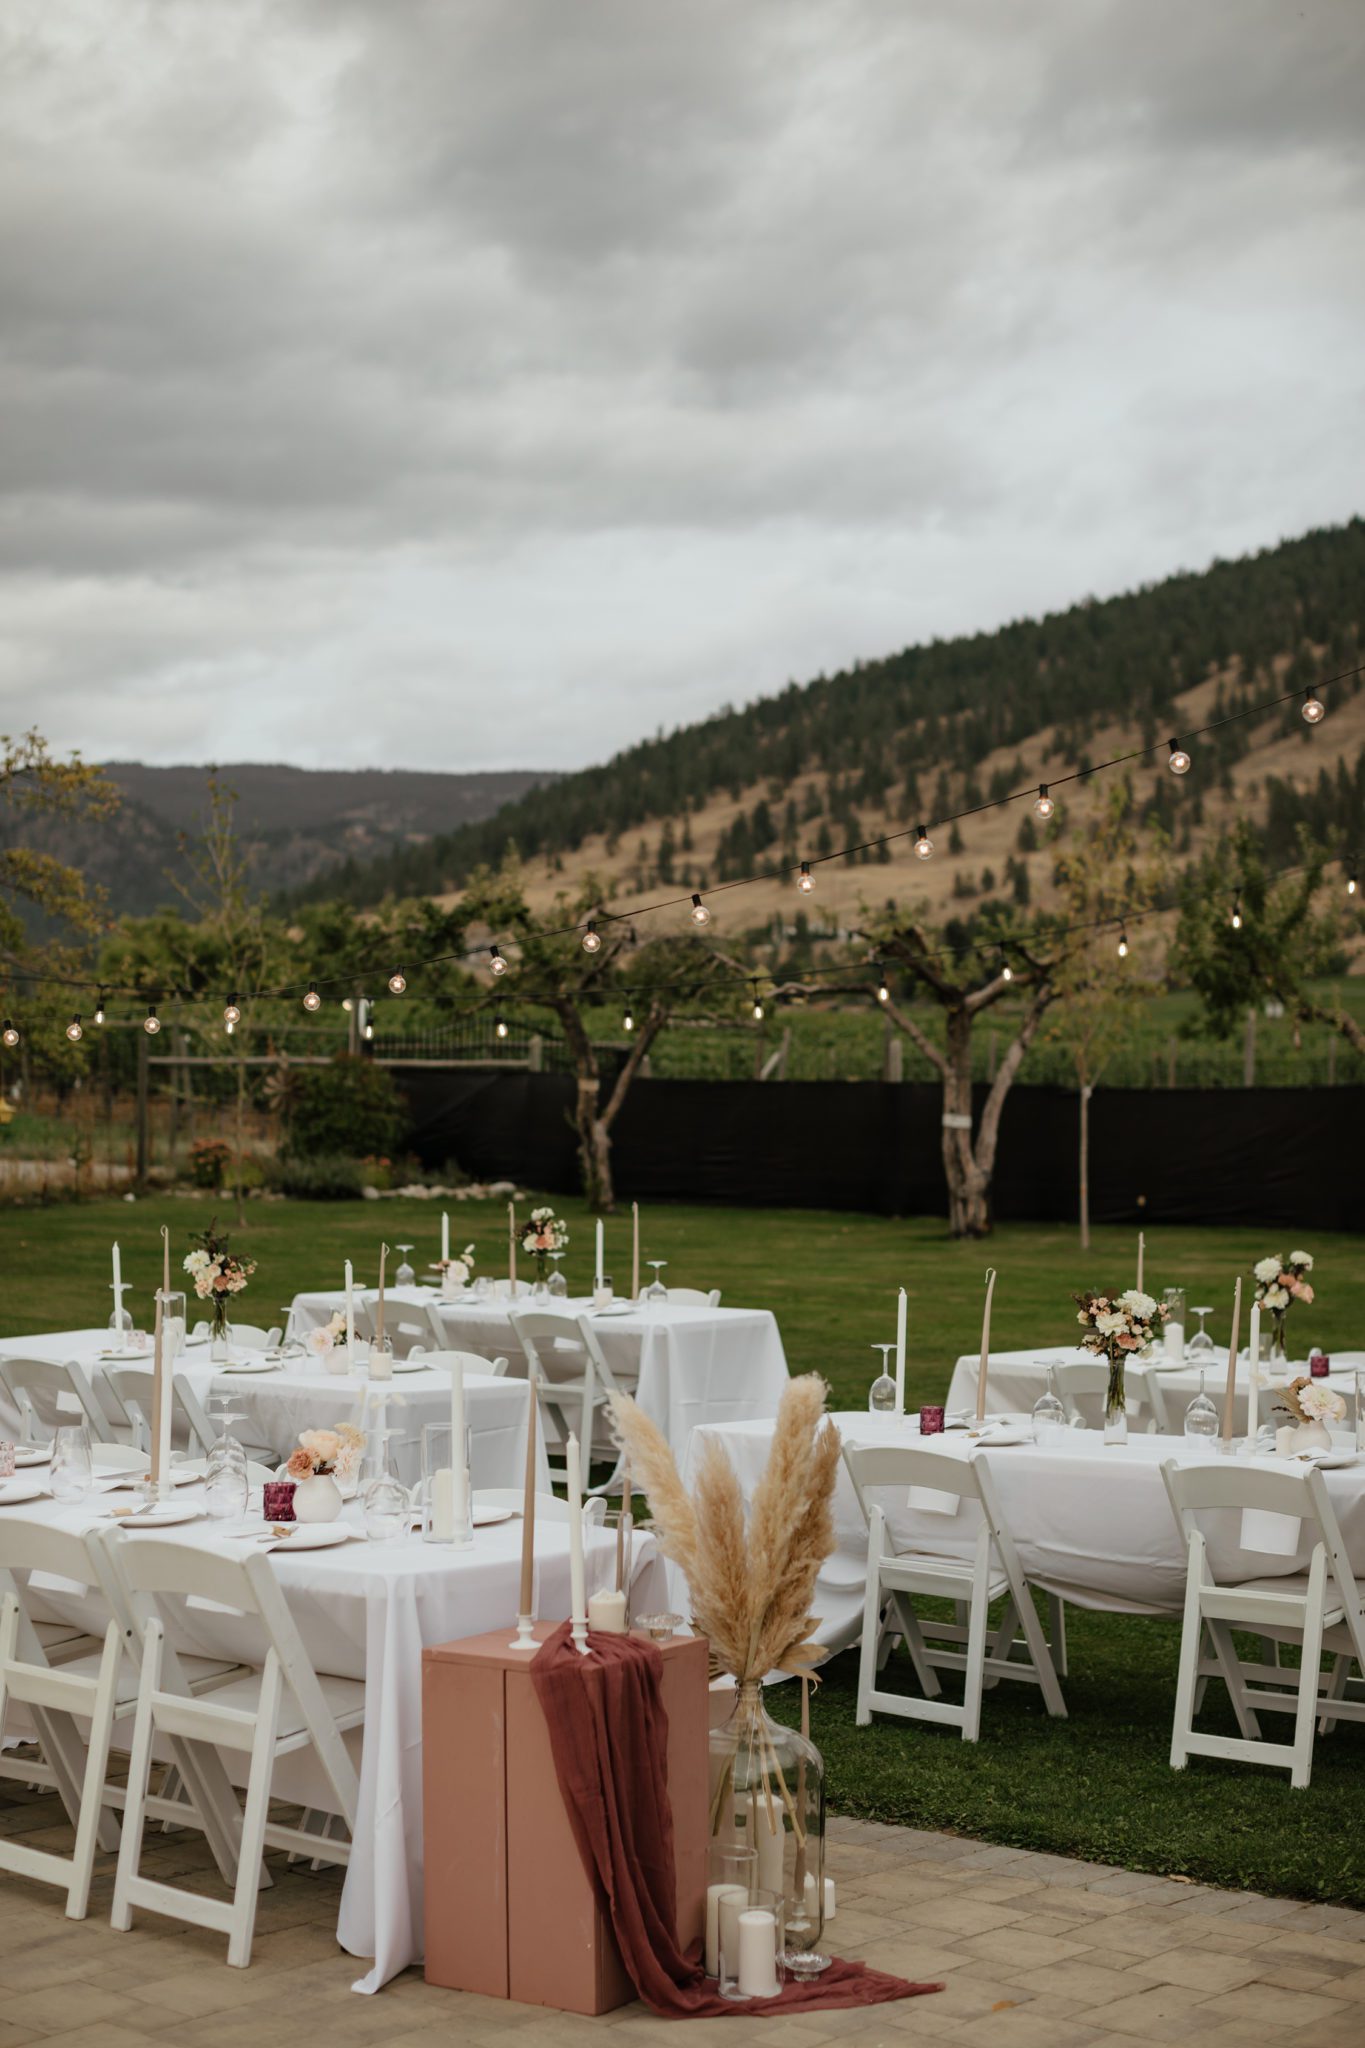 Stunning vineyard summer wedding reception decor in the Okanagan Valley of British Columbia